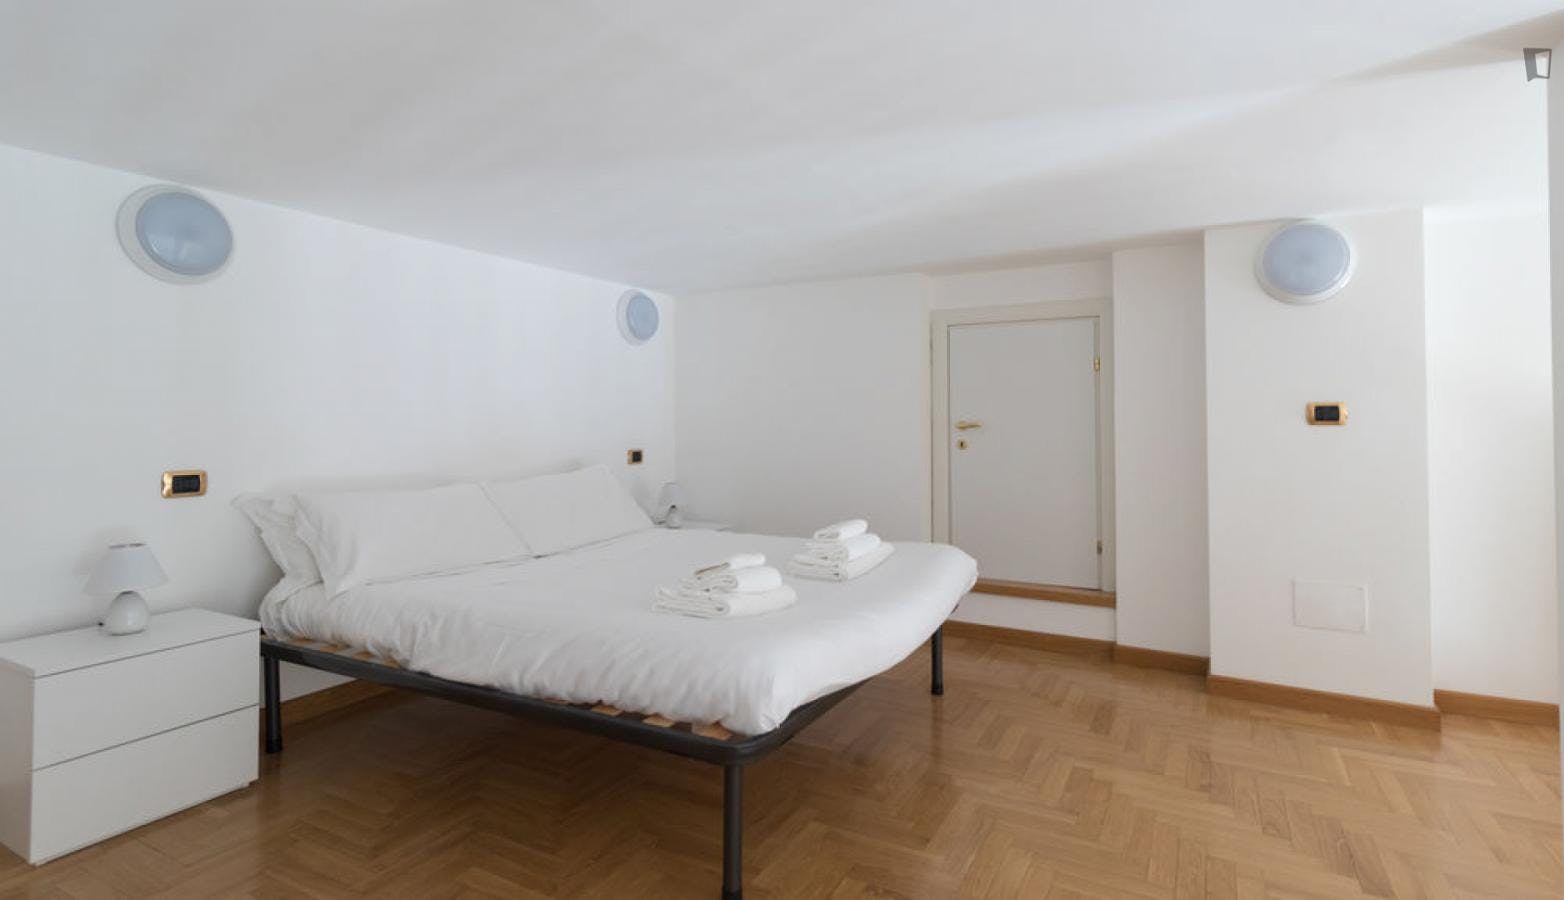 Excellent 2-bedroom flat in sunny Sanremo